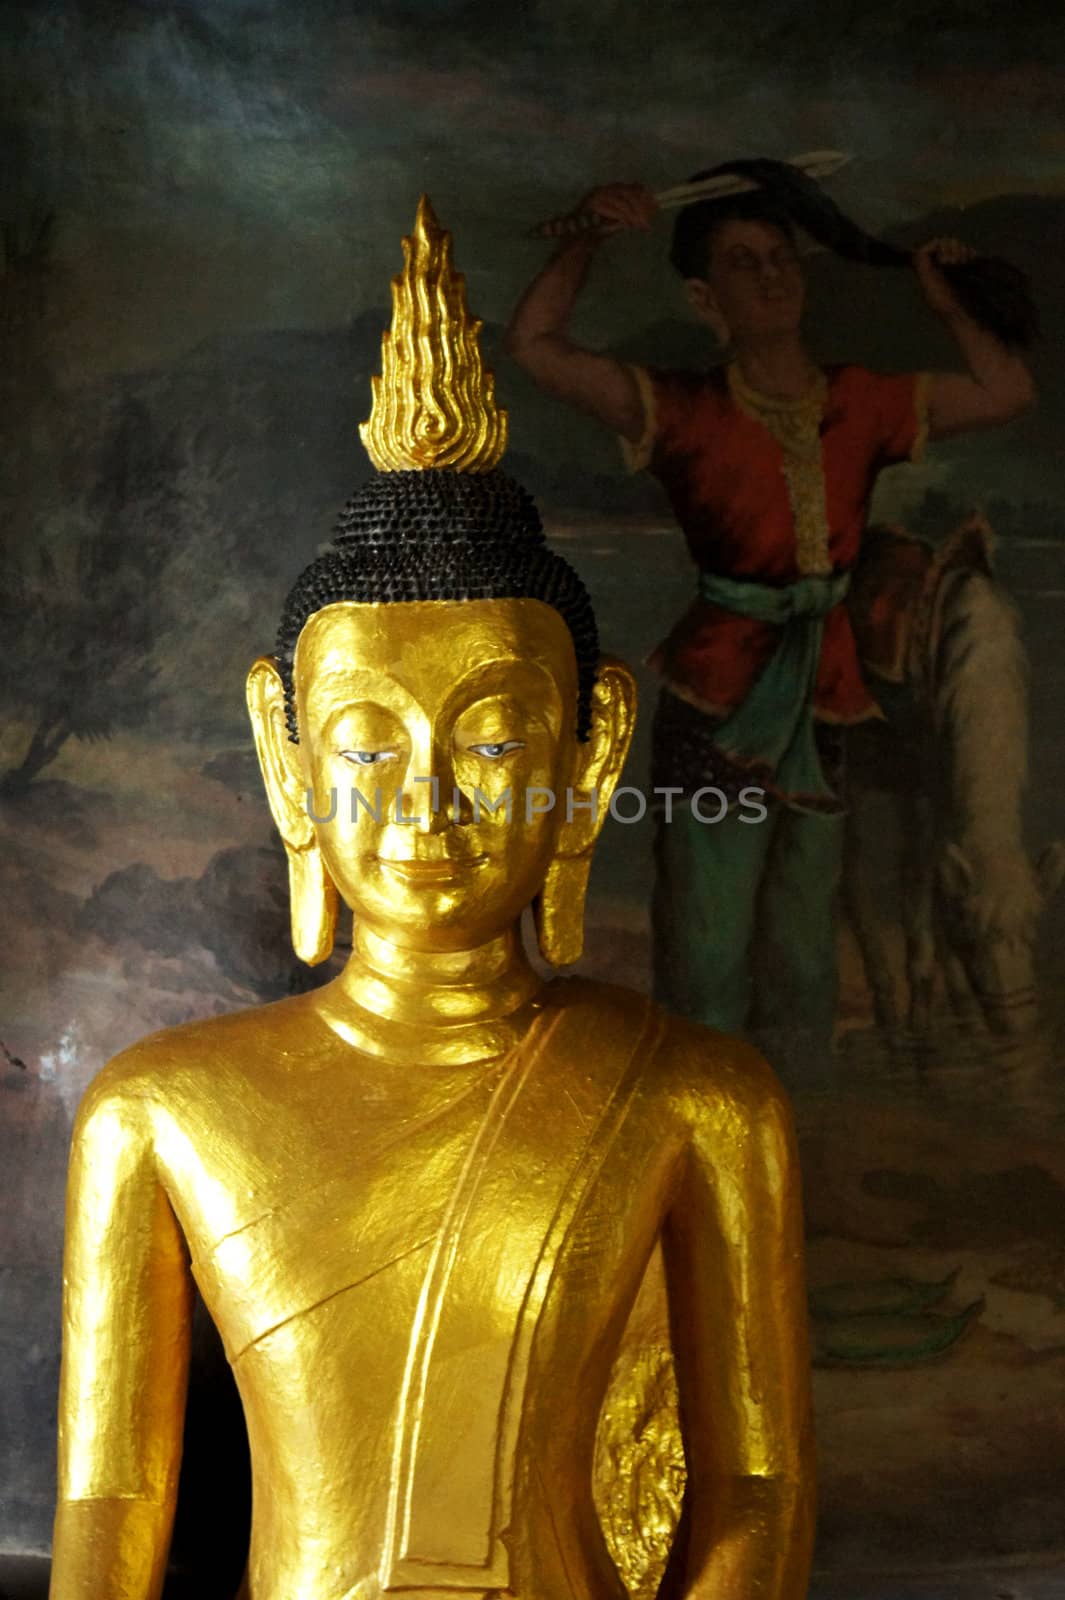 Reclining Buddha statue in Thailand Buddha Temple , Asian style Buddha Art.